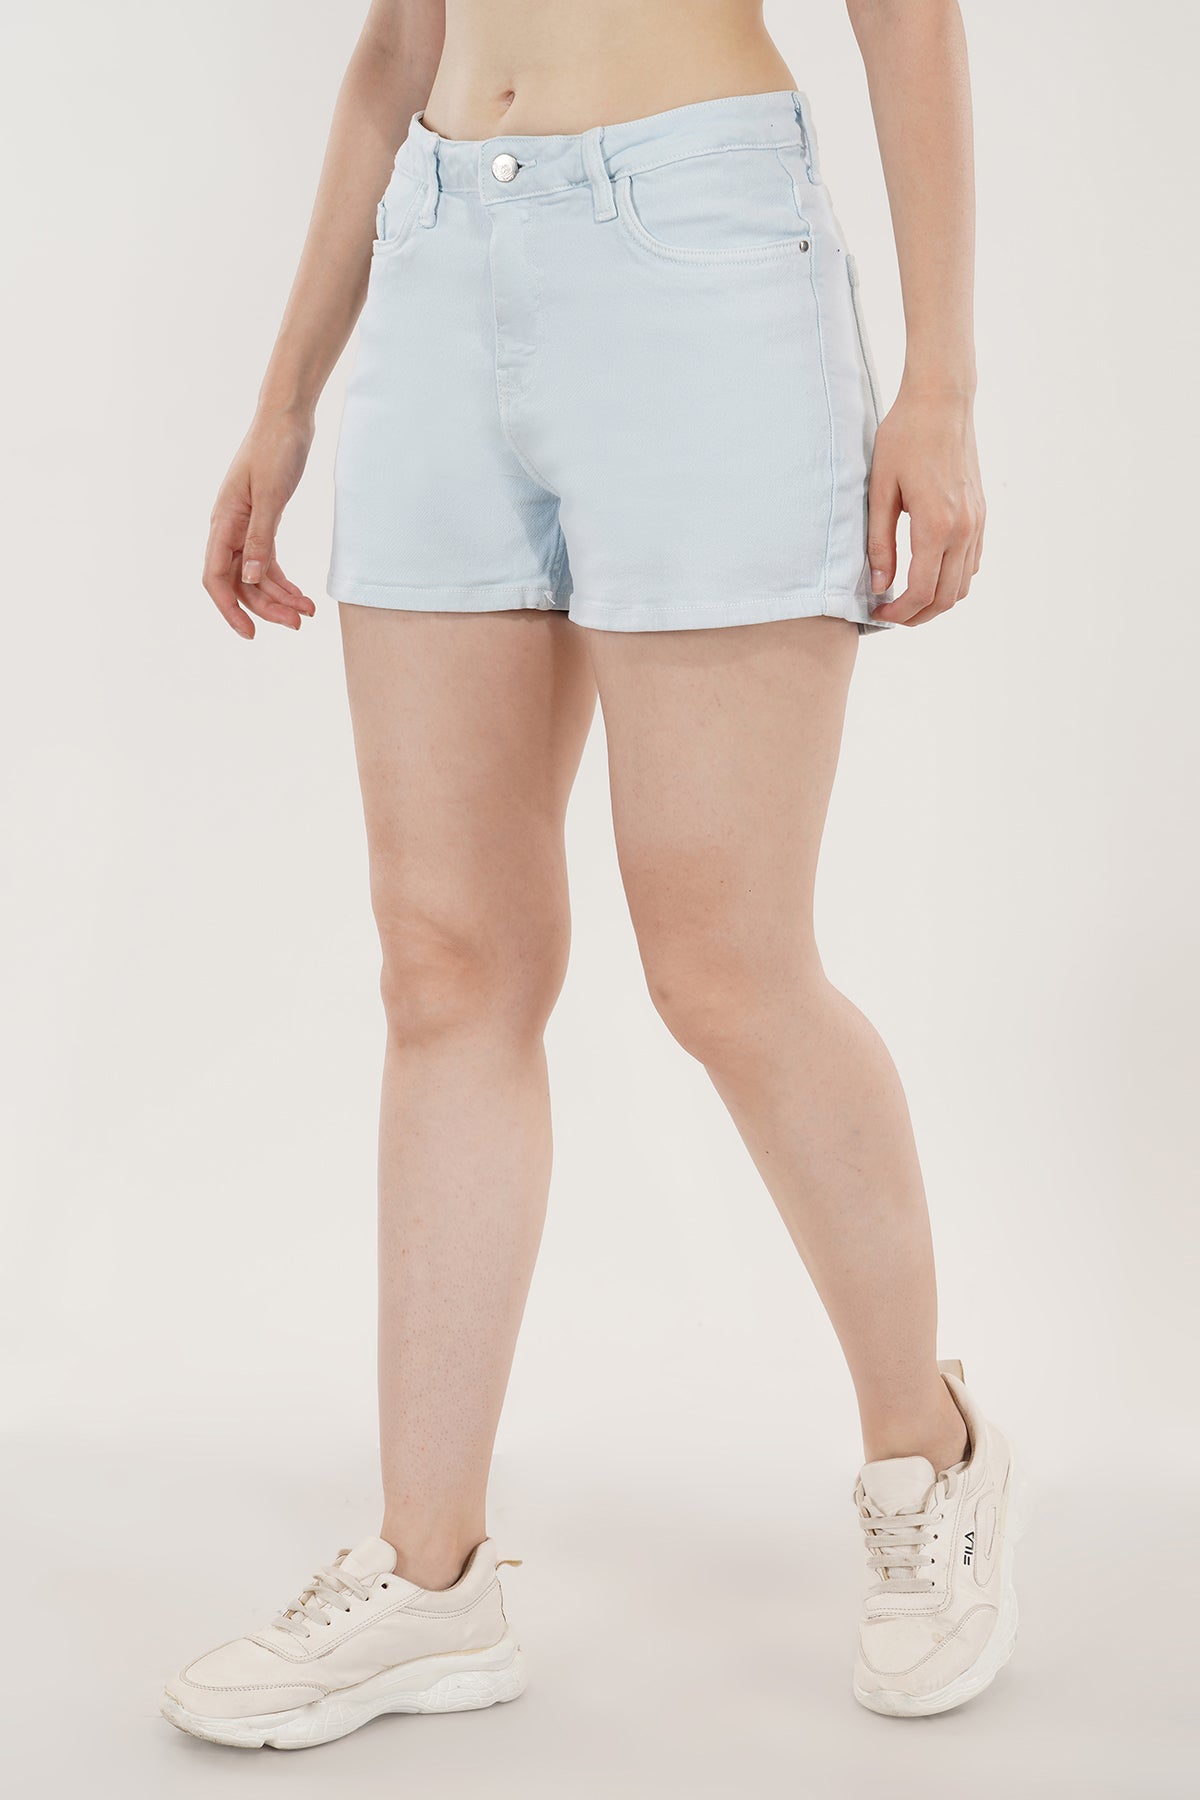 Women's Sky Blue Denim Shorts